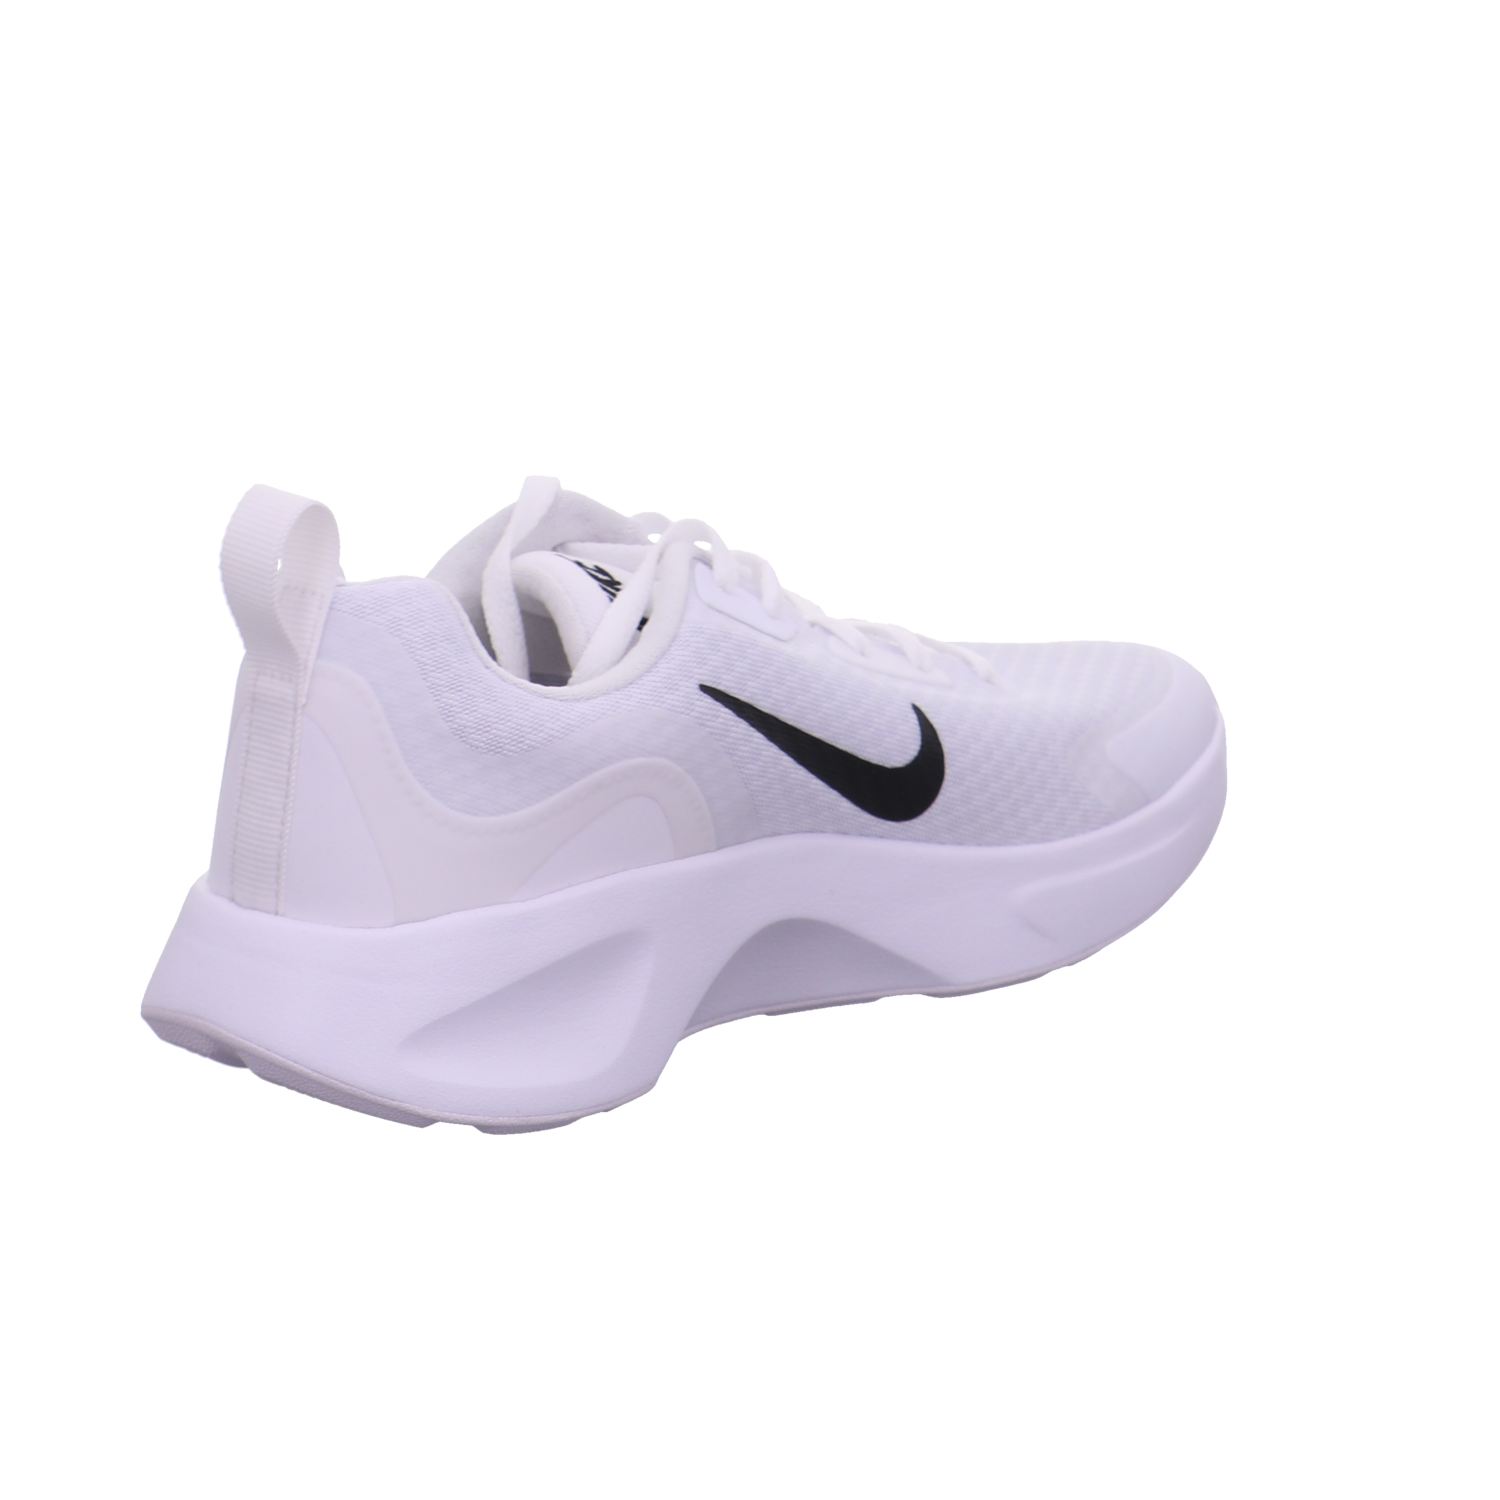 Nike Sneaker weiß-schwarz Bild5